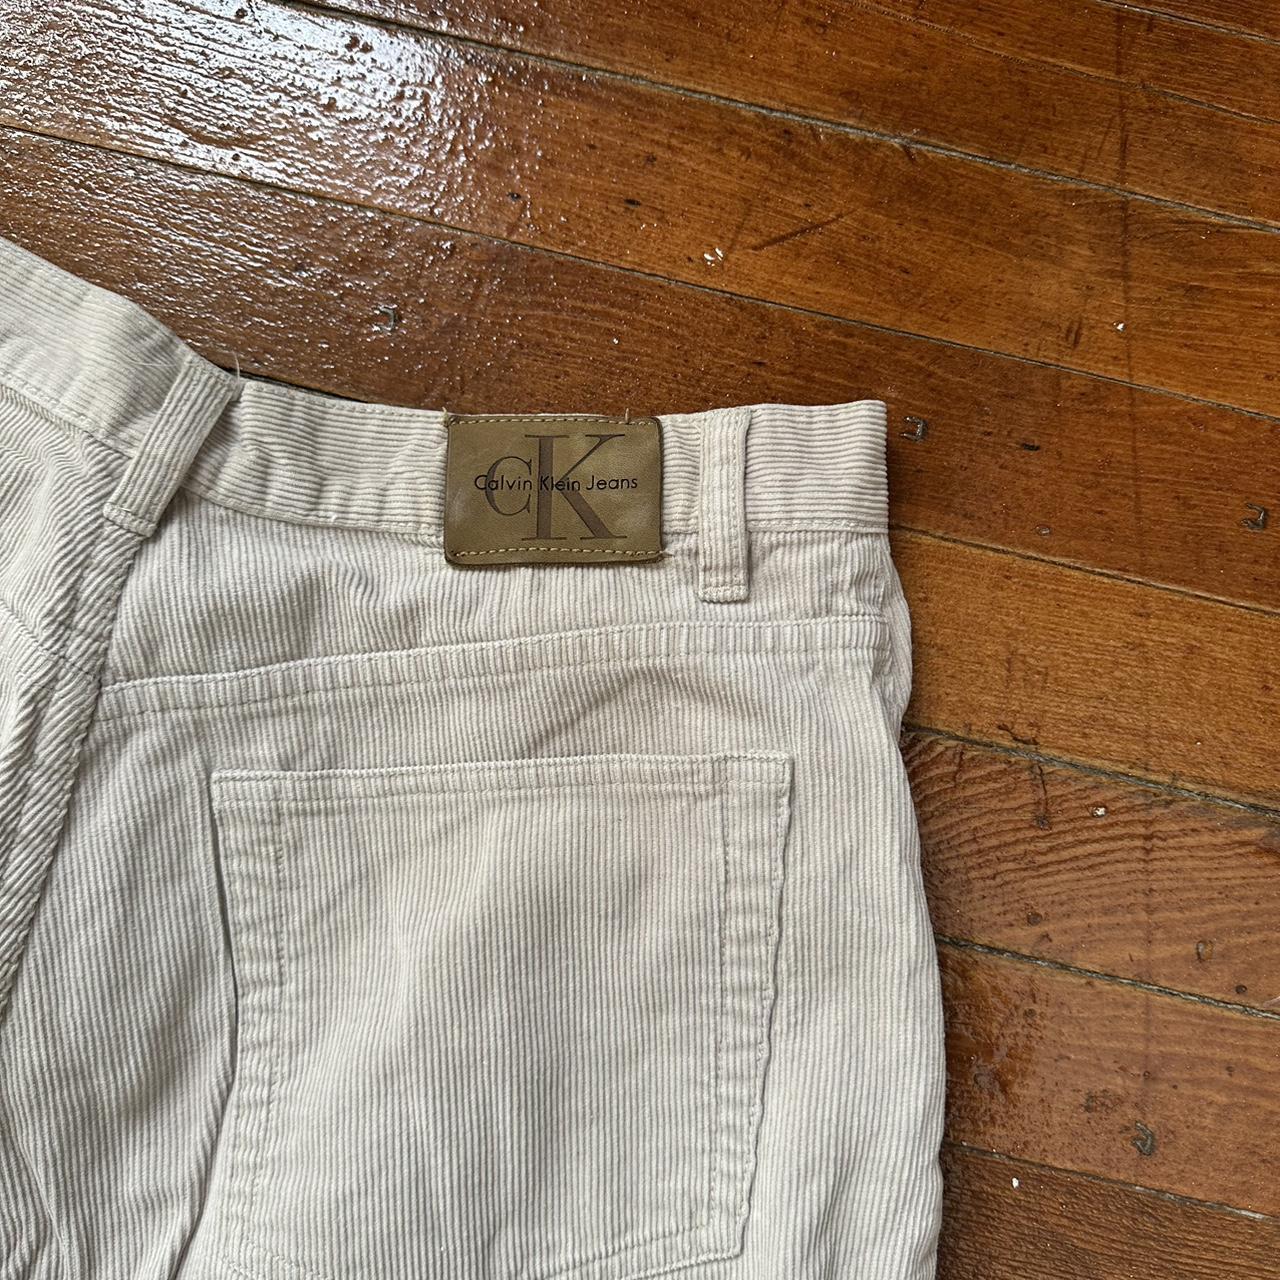 Offwhite corduroy vintage Calvin Klein pants No... - Depop